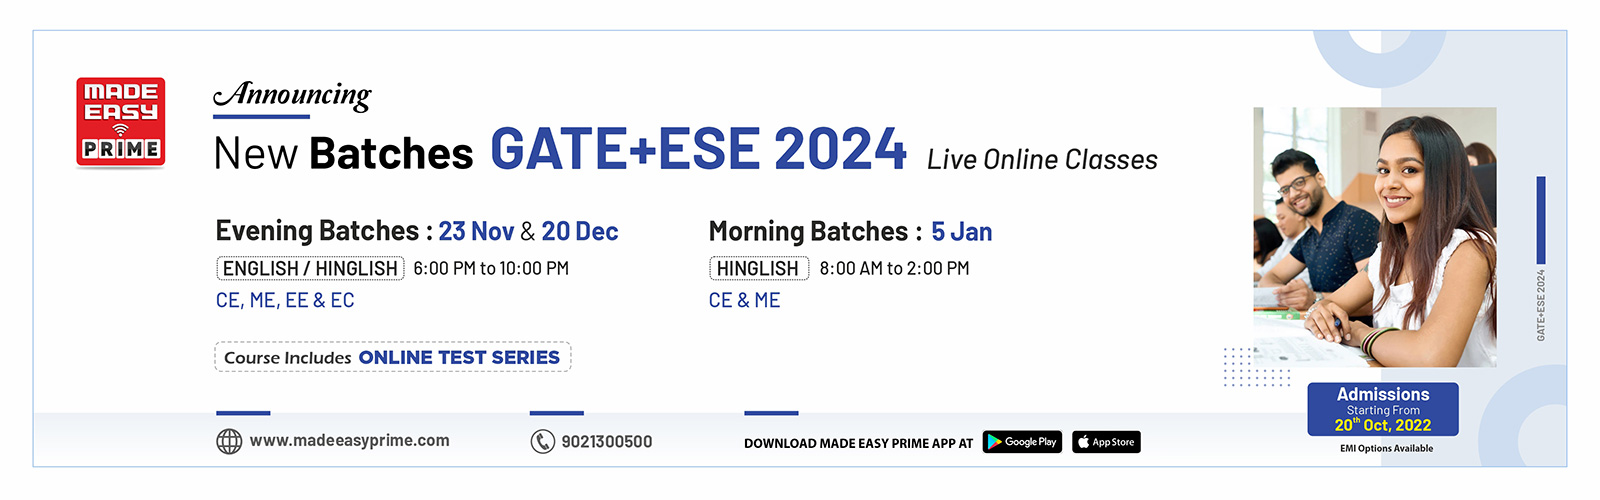 ESE - GATE 2024 PRIME